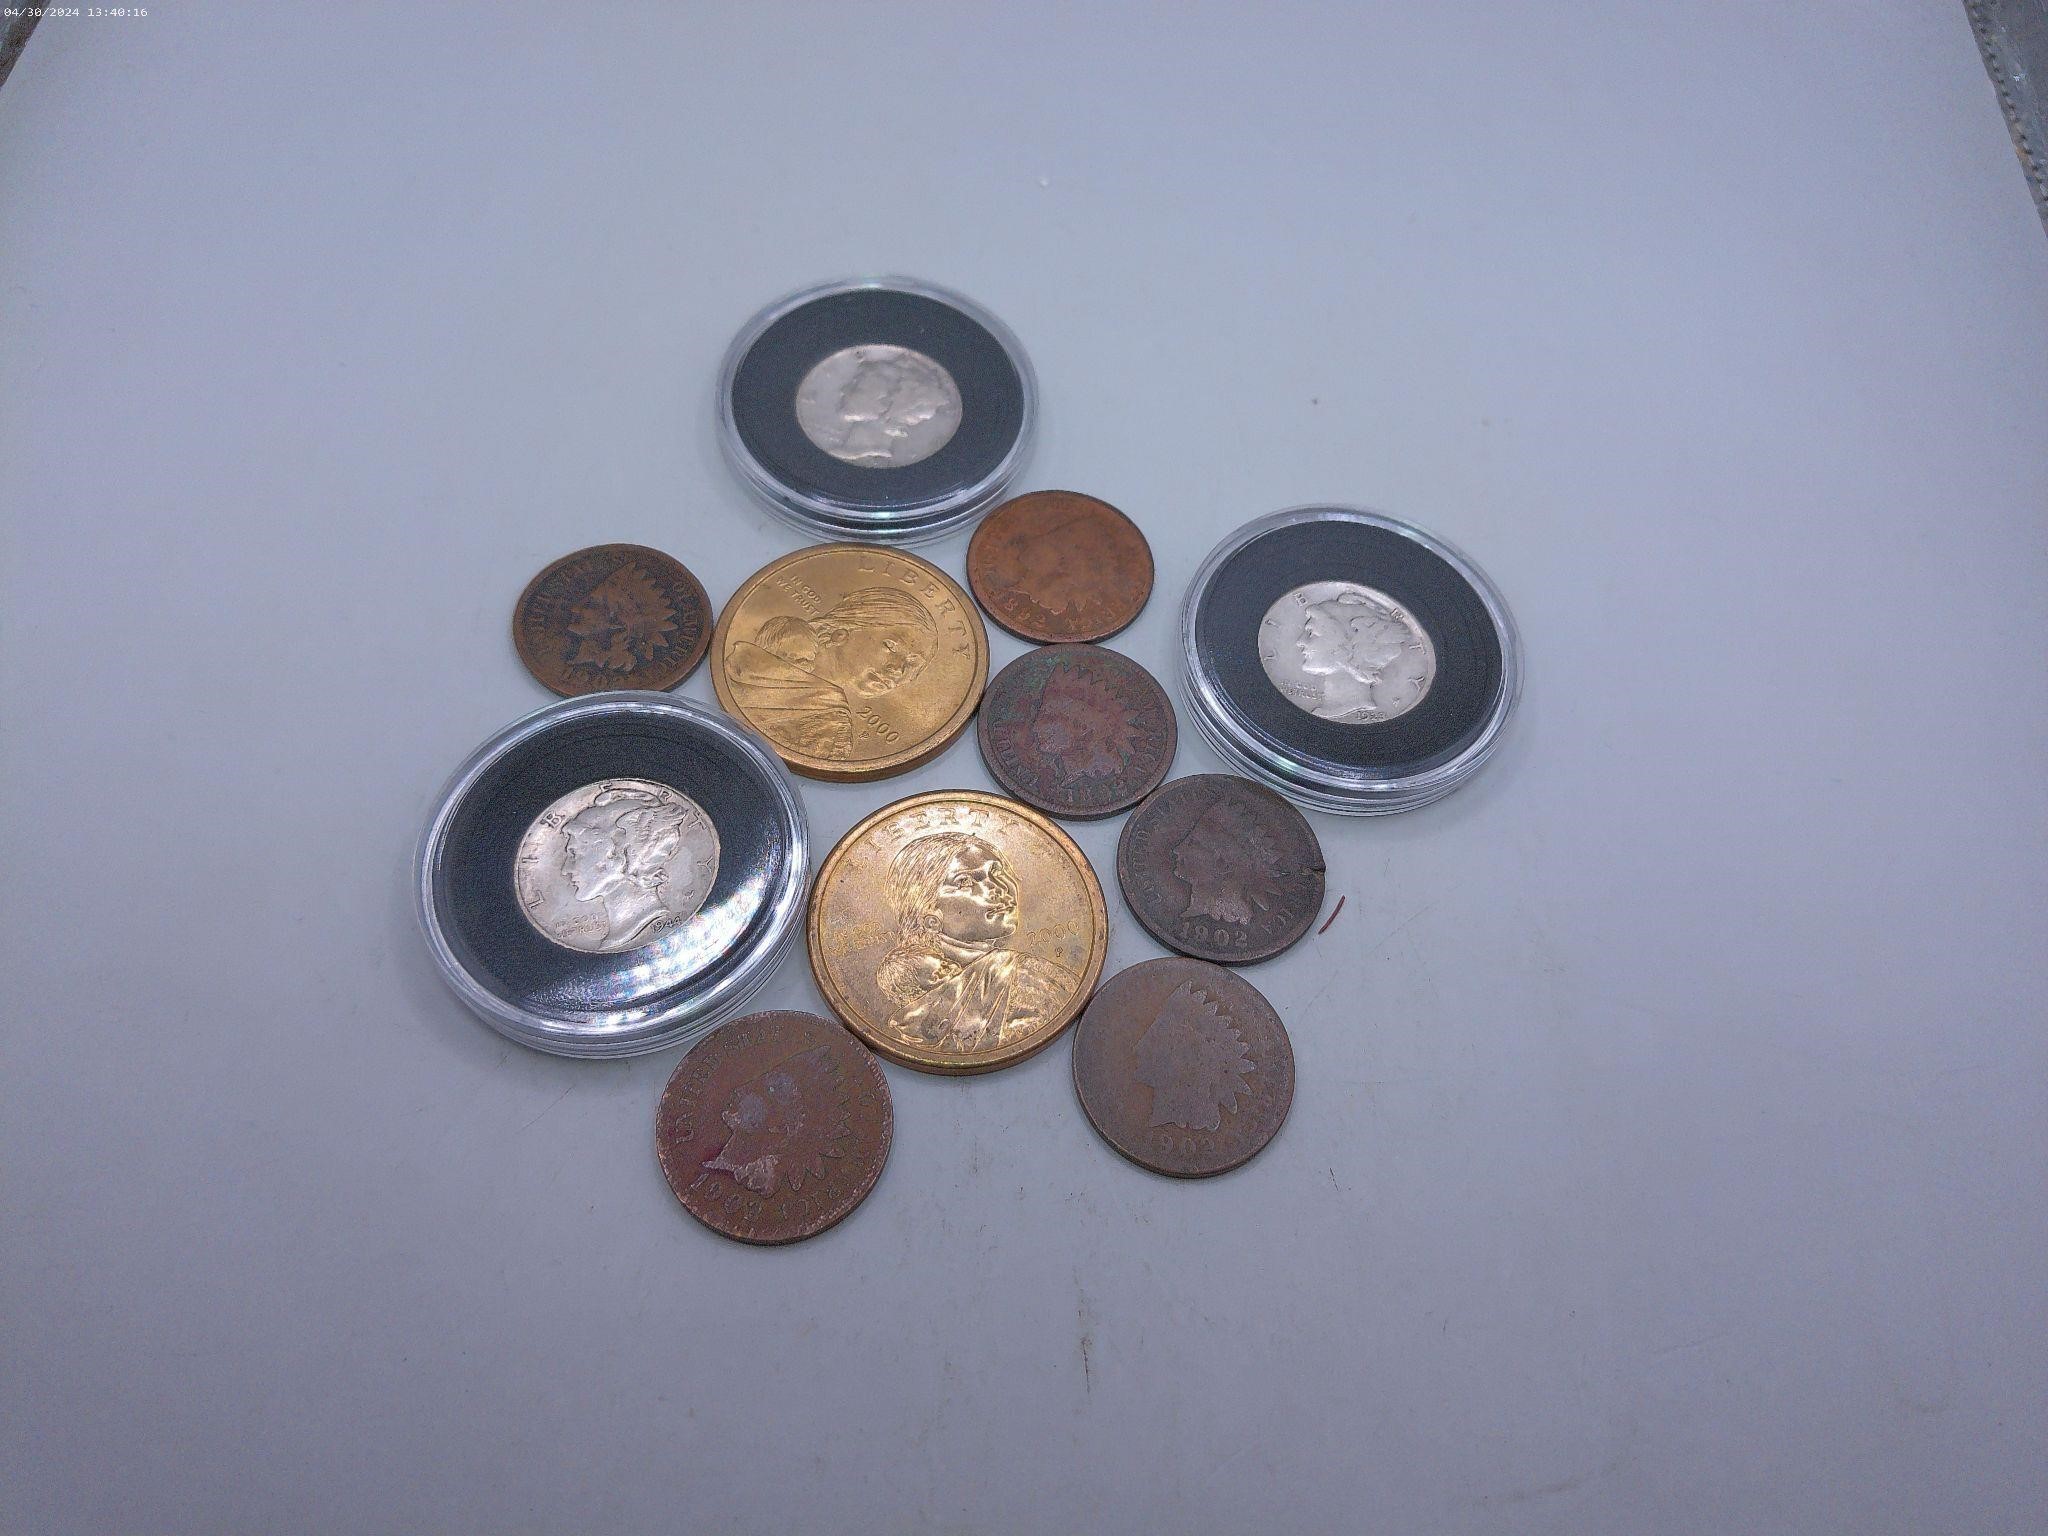 Grab Bag Lot of Vintage U.S. Coins! - Some Silver!